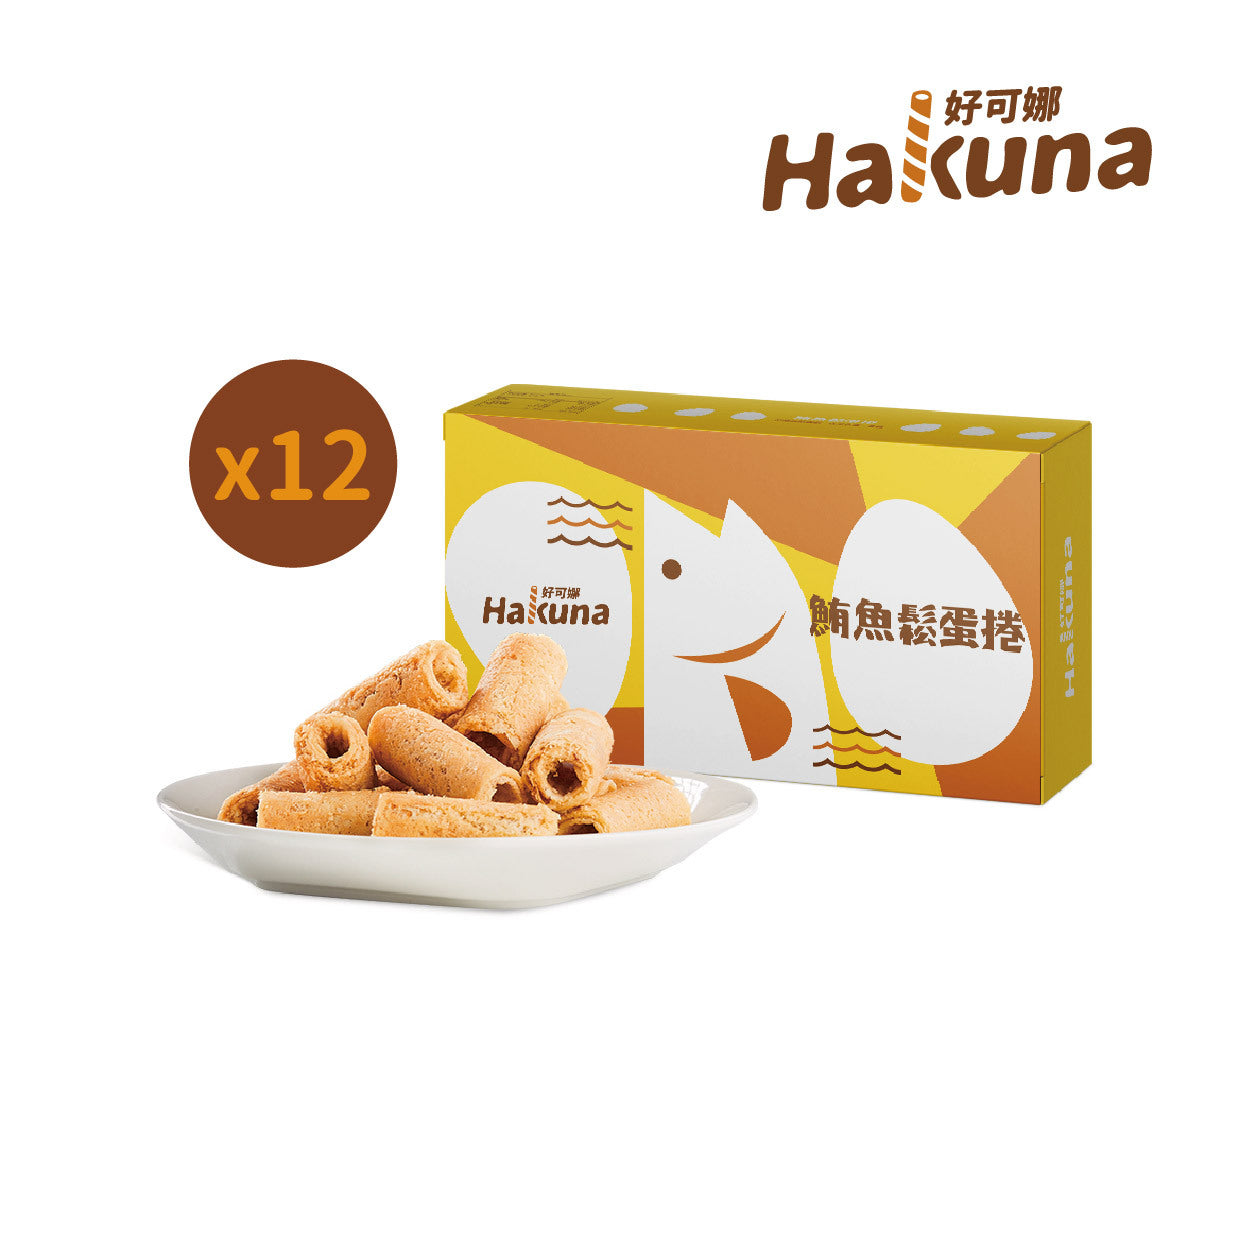 【Hakuna】Tuna pine egg rolls 12 boxes (9 small pieces/box)